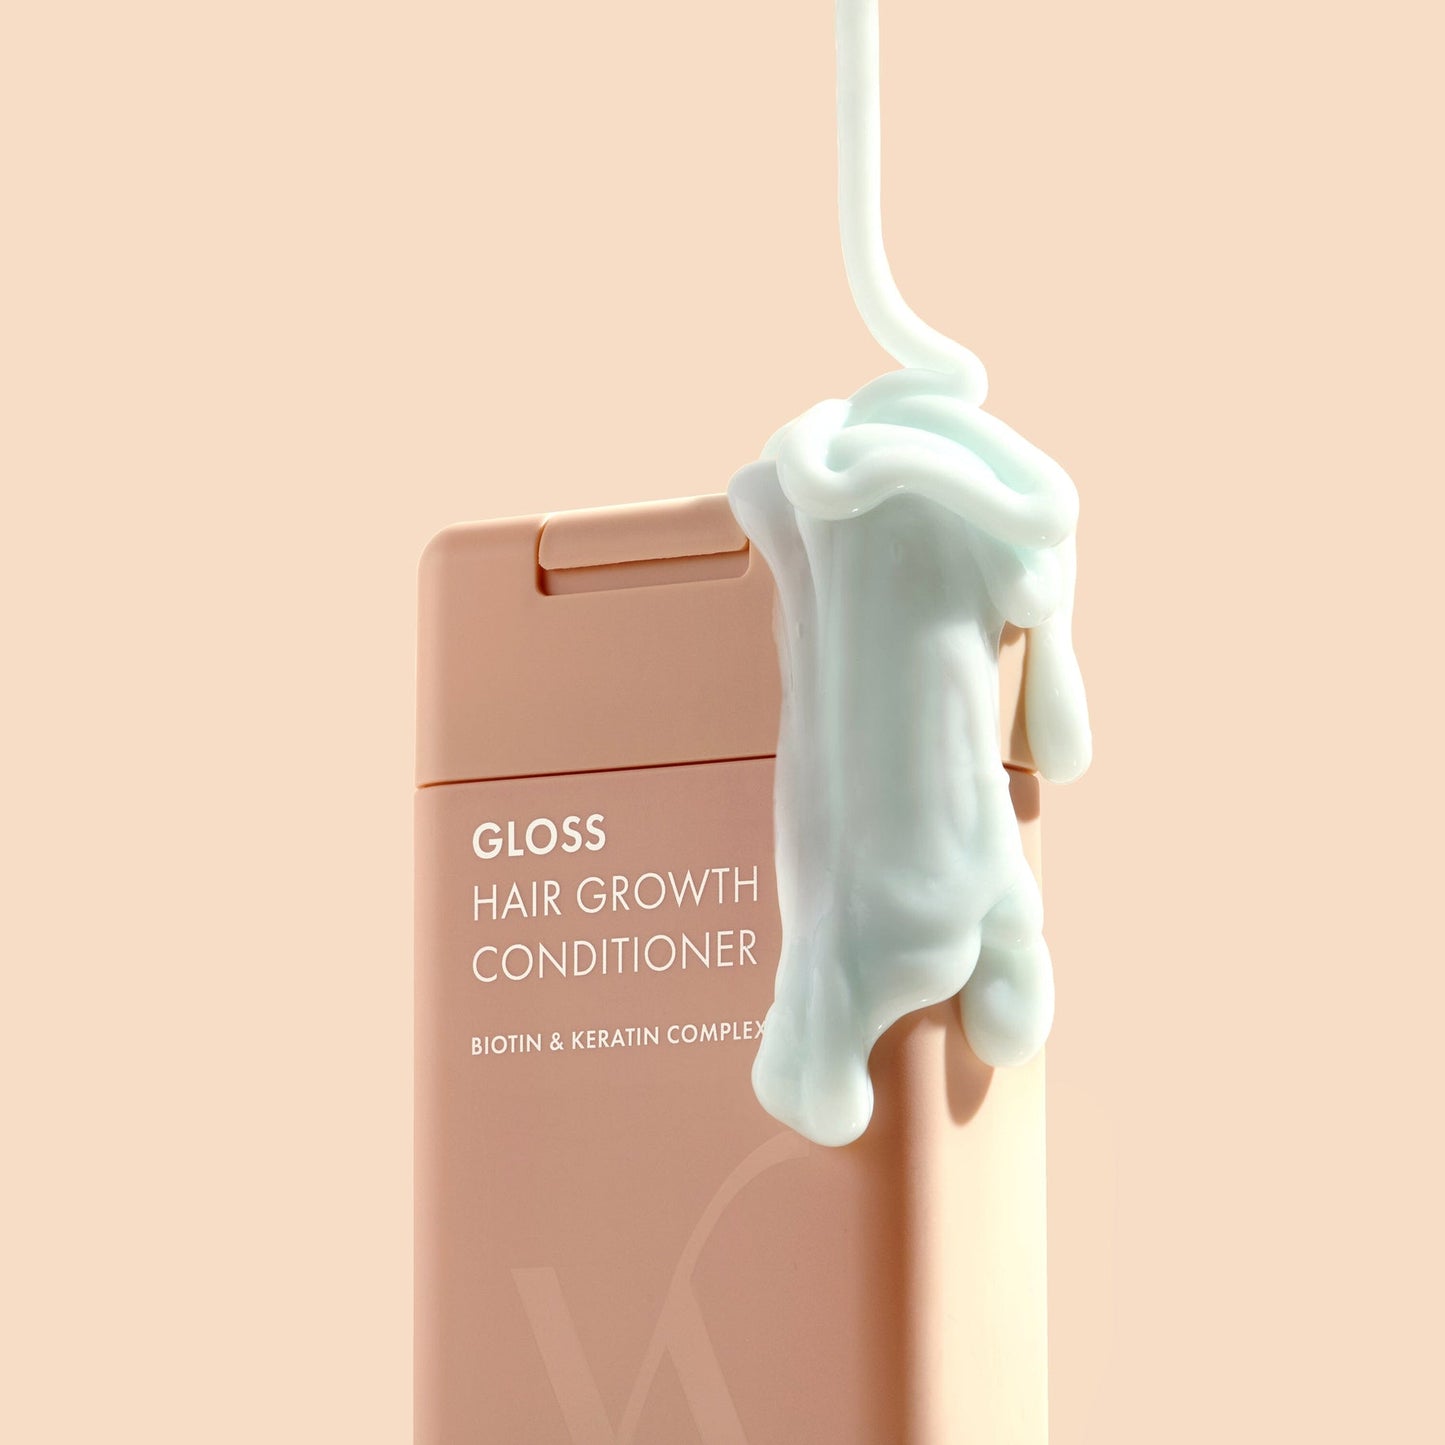 VANI-T Gloss Hair Growth Conditioner.